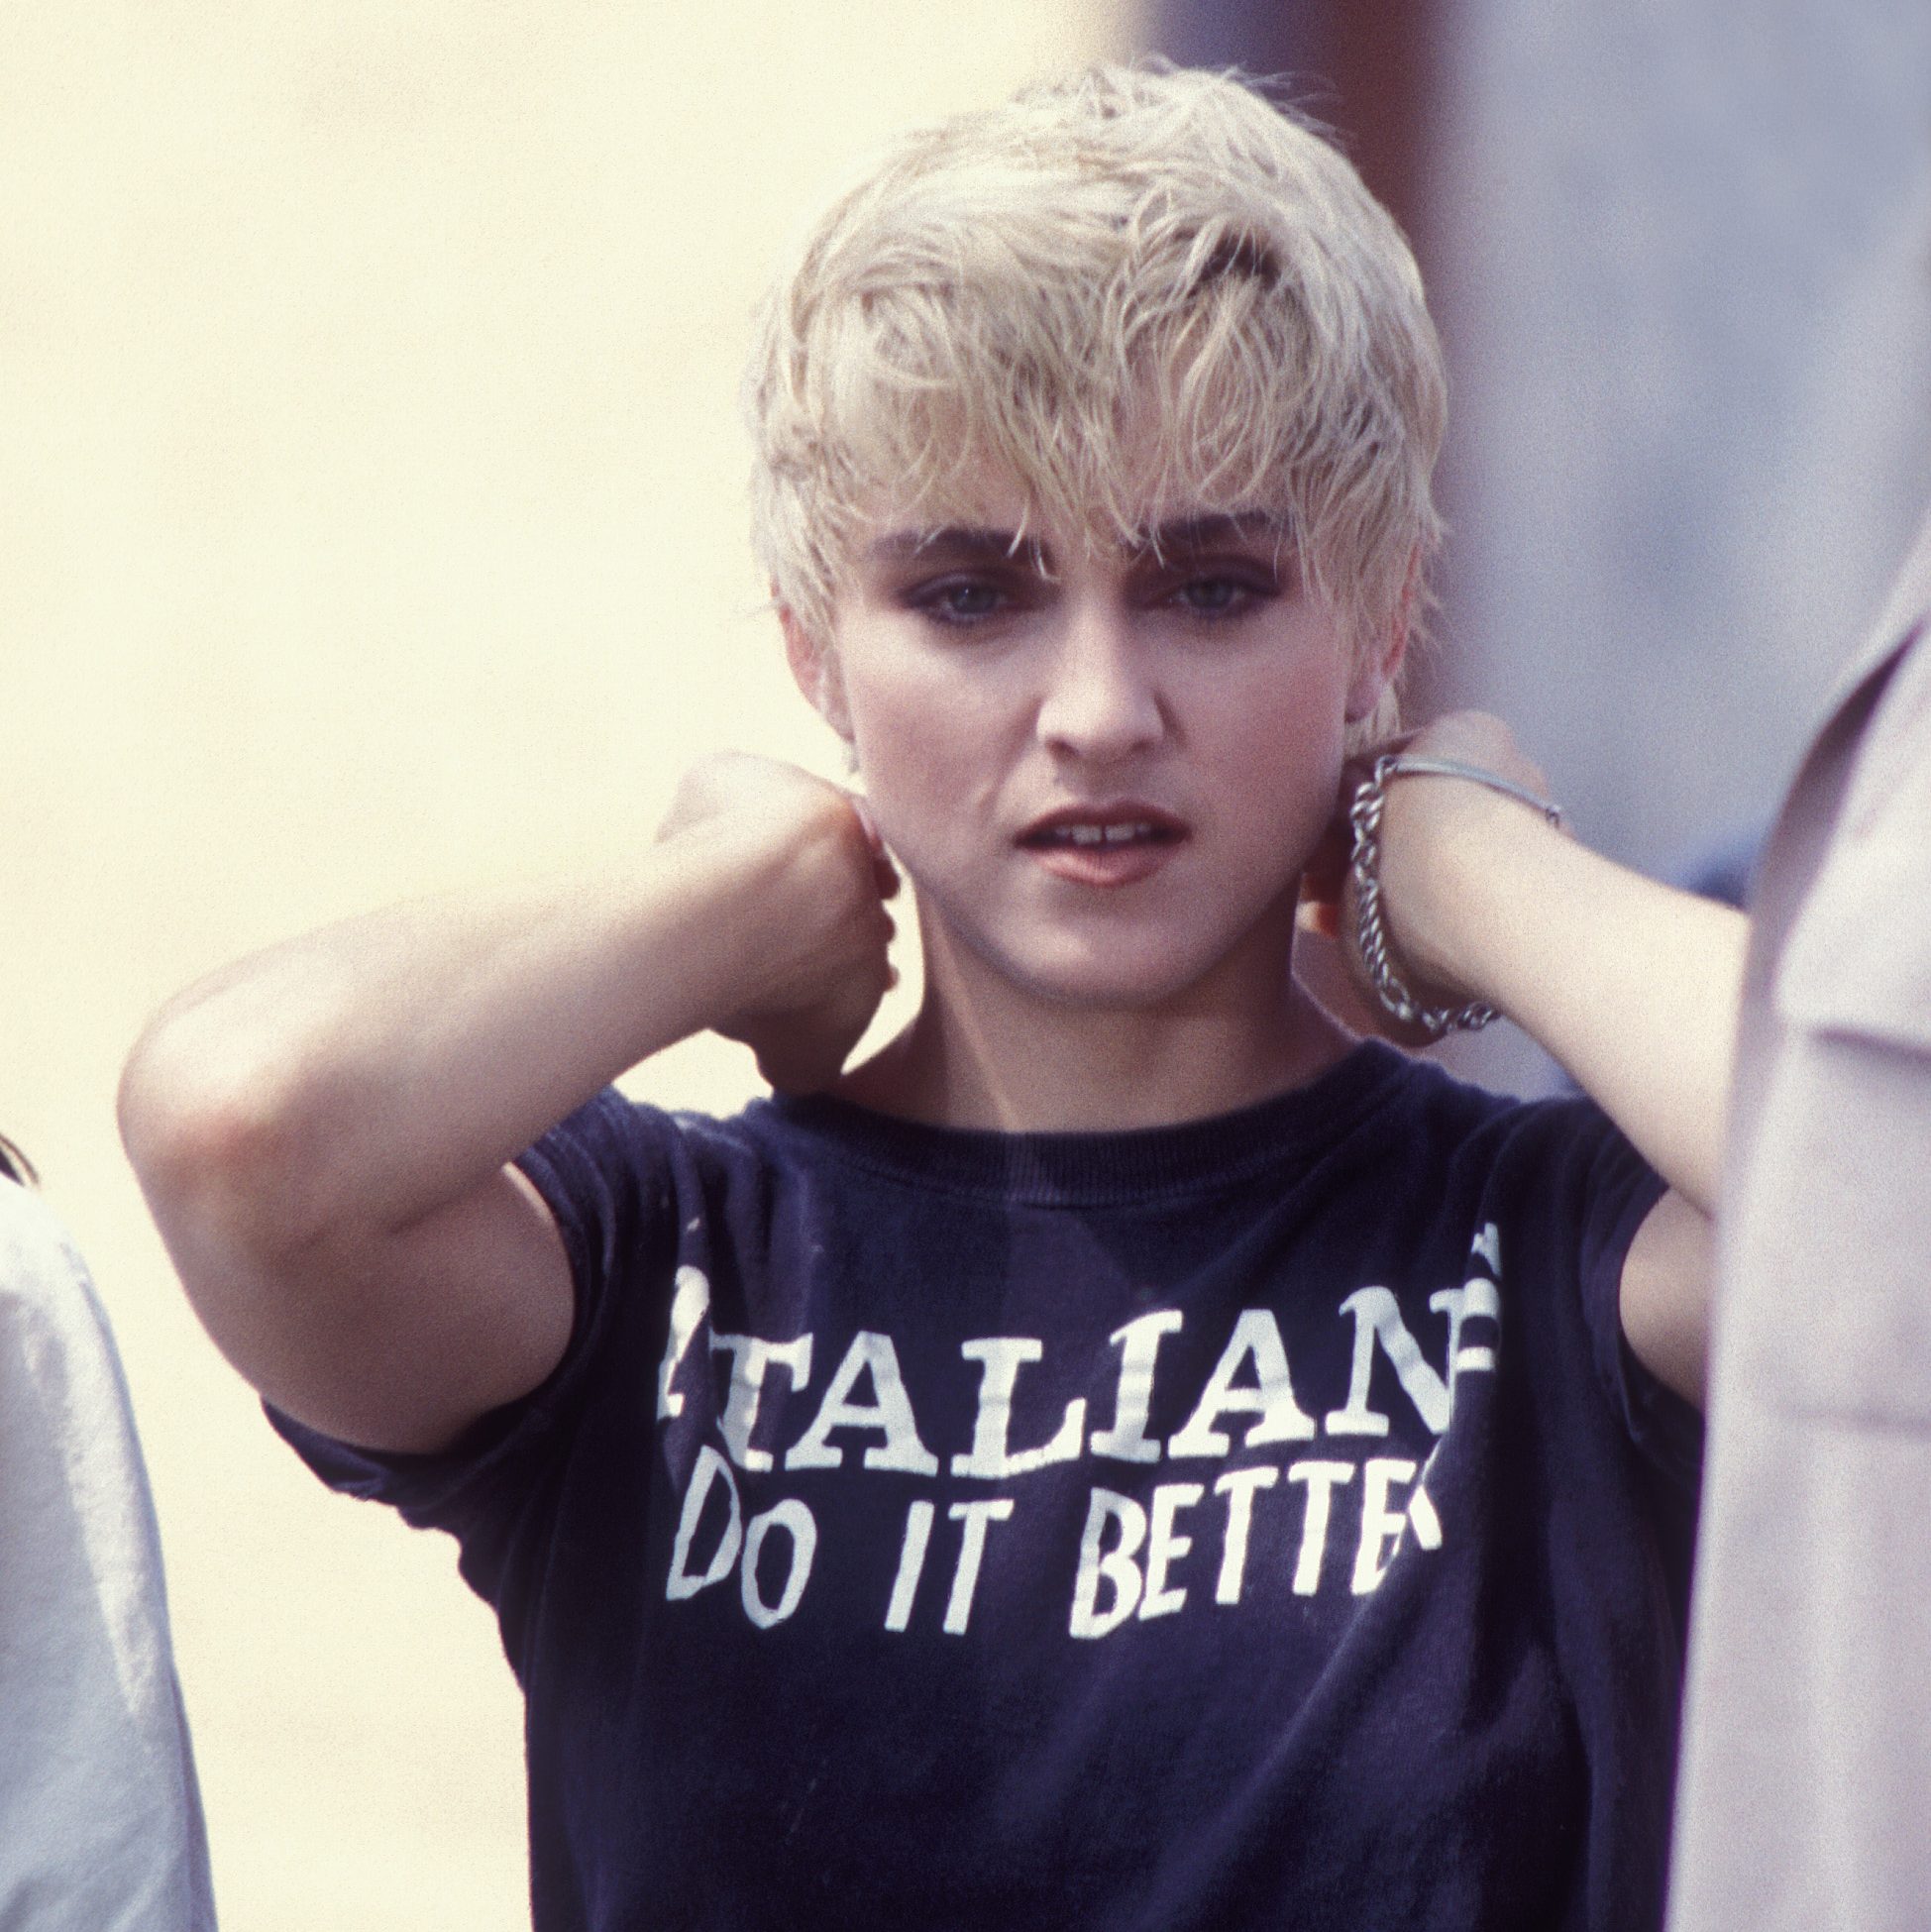 Madonna, 1986